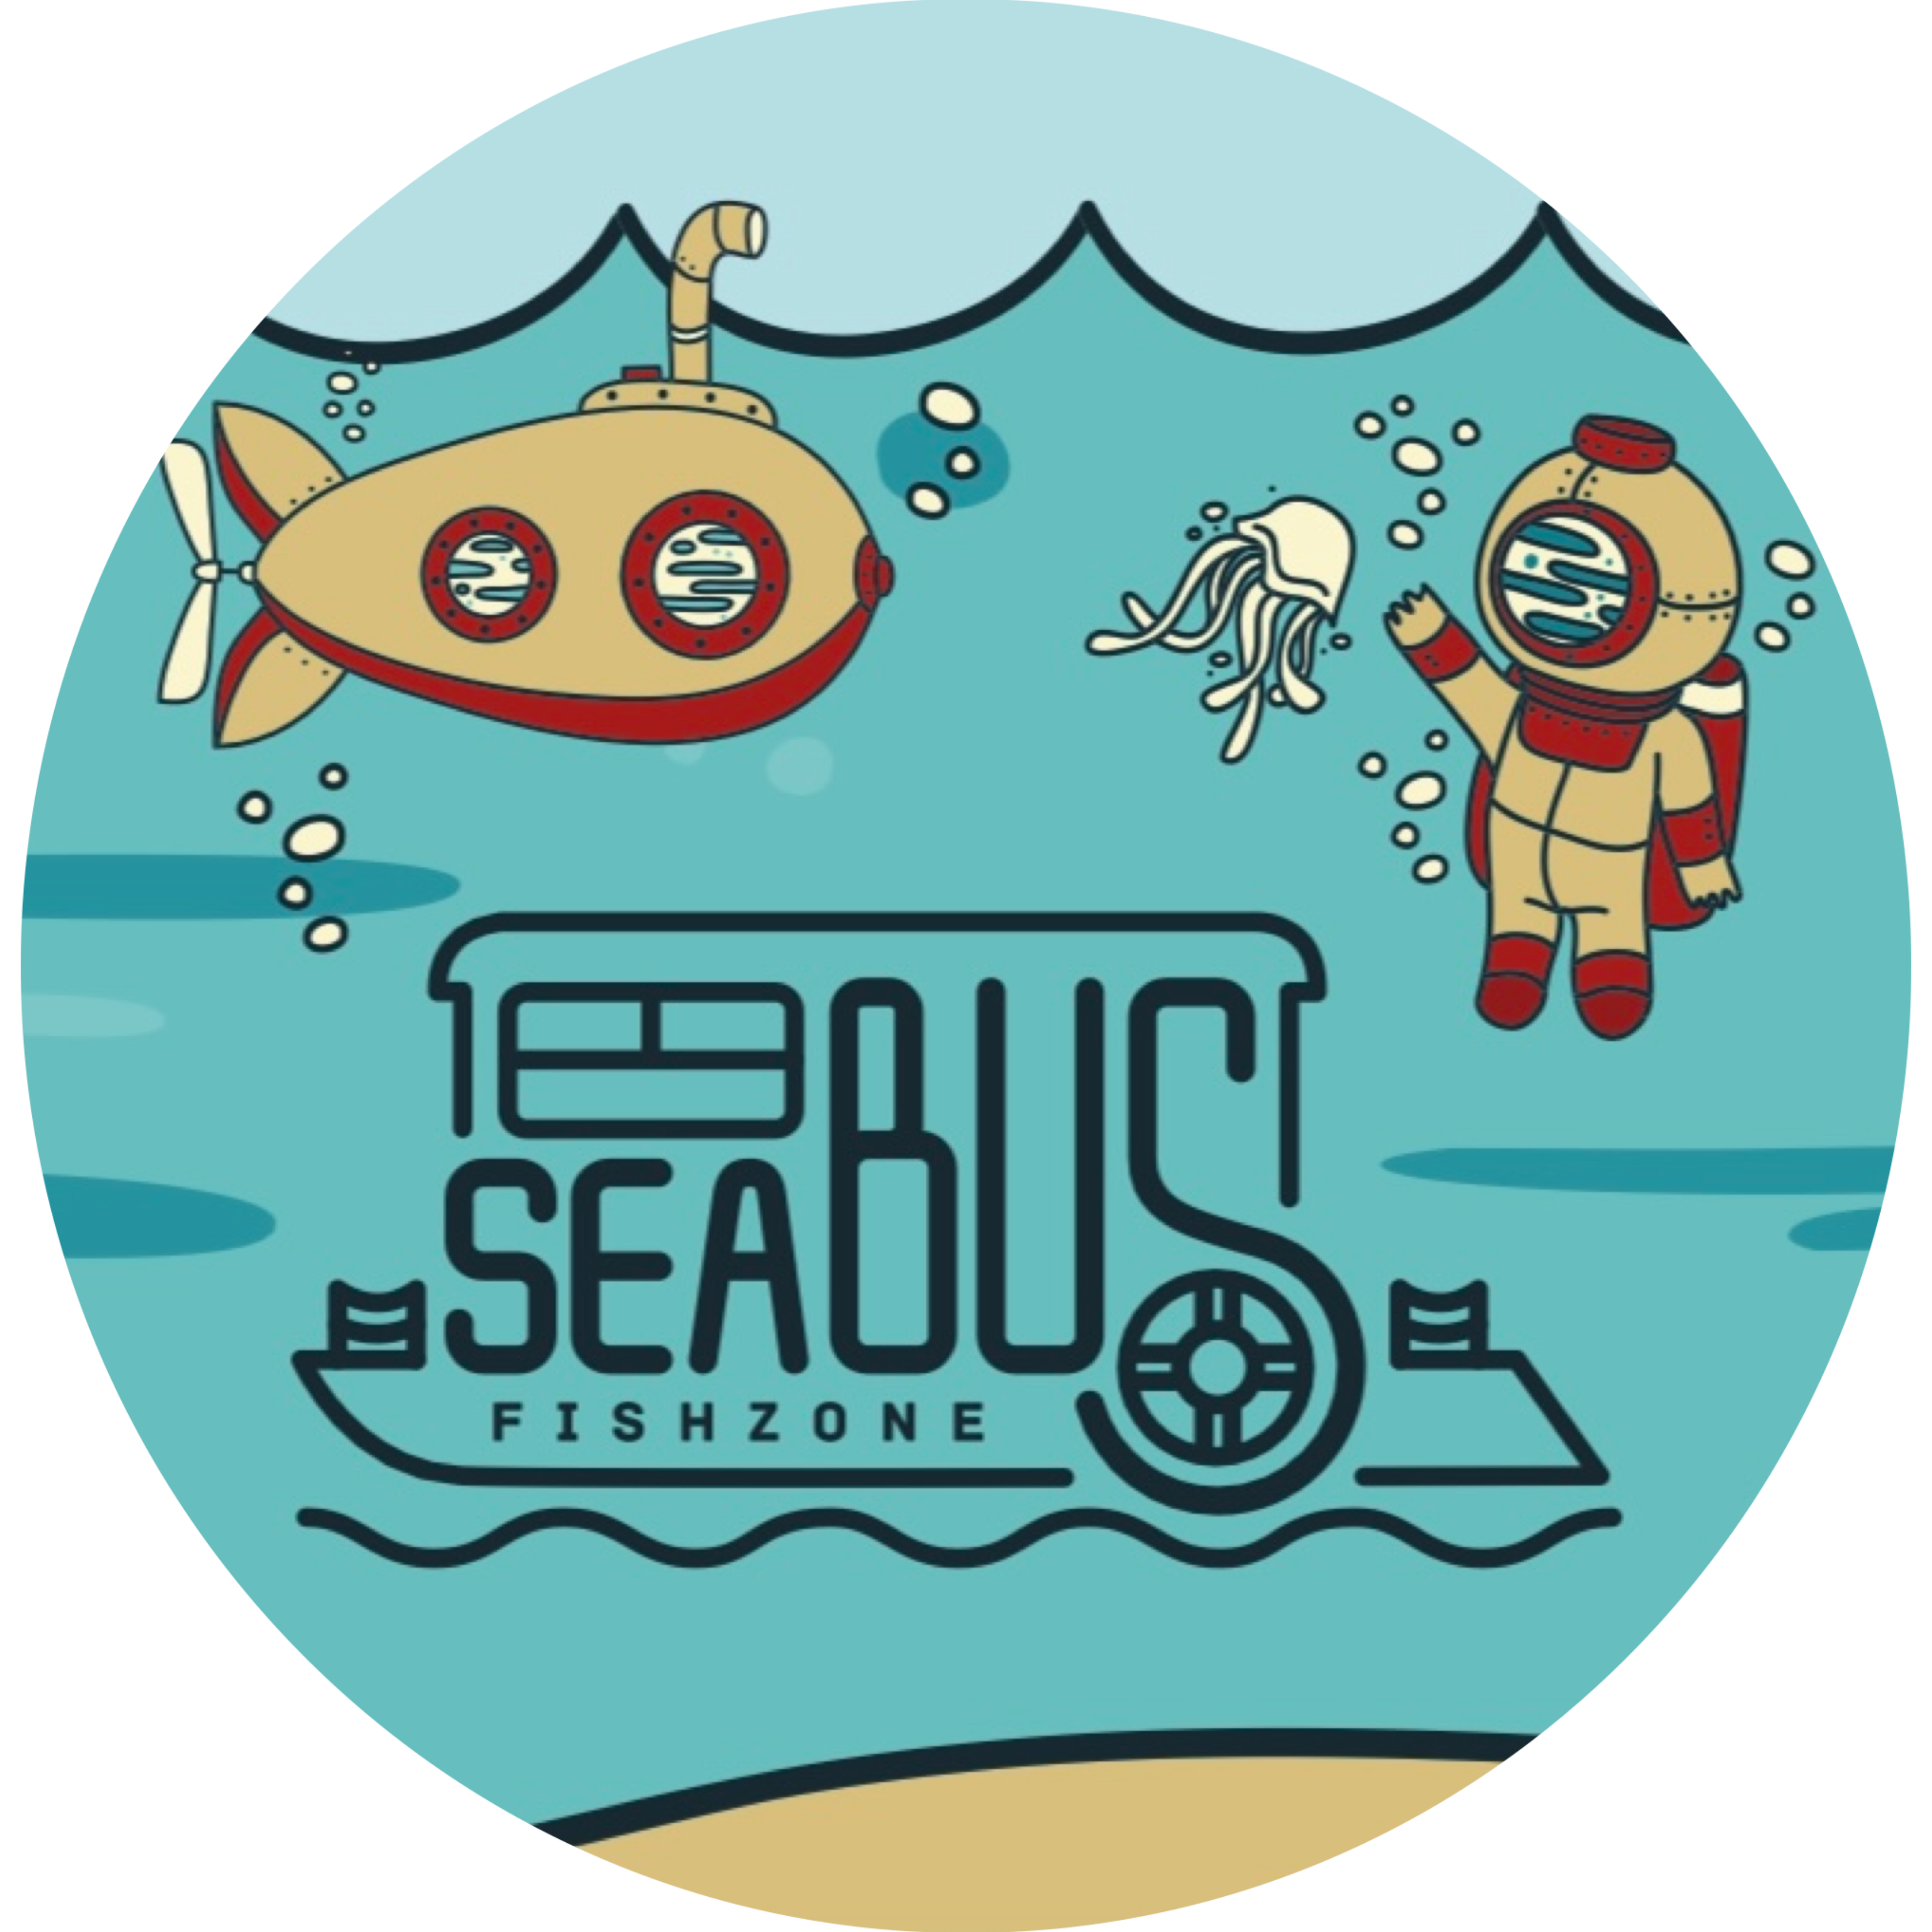 Seabus Сочи. Ресторан морской Сочи лого. Кафе Сочи логотип в. Seabus Сочи ресторан меню.